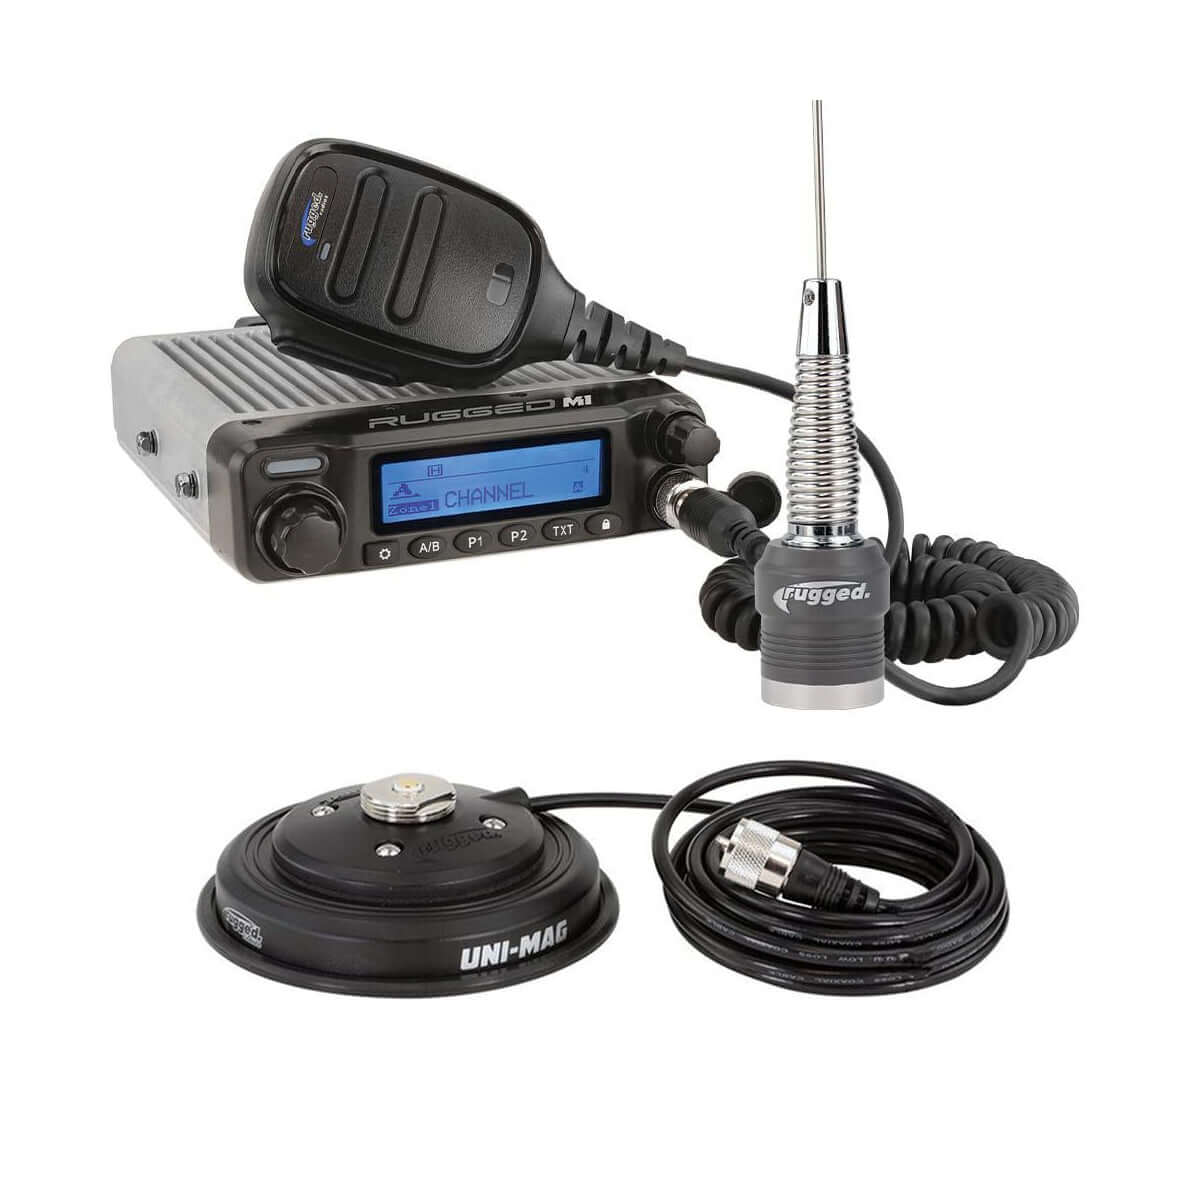 Radio Kit M1 w/Antenna Digital / Analog VHF - $548.99